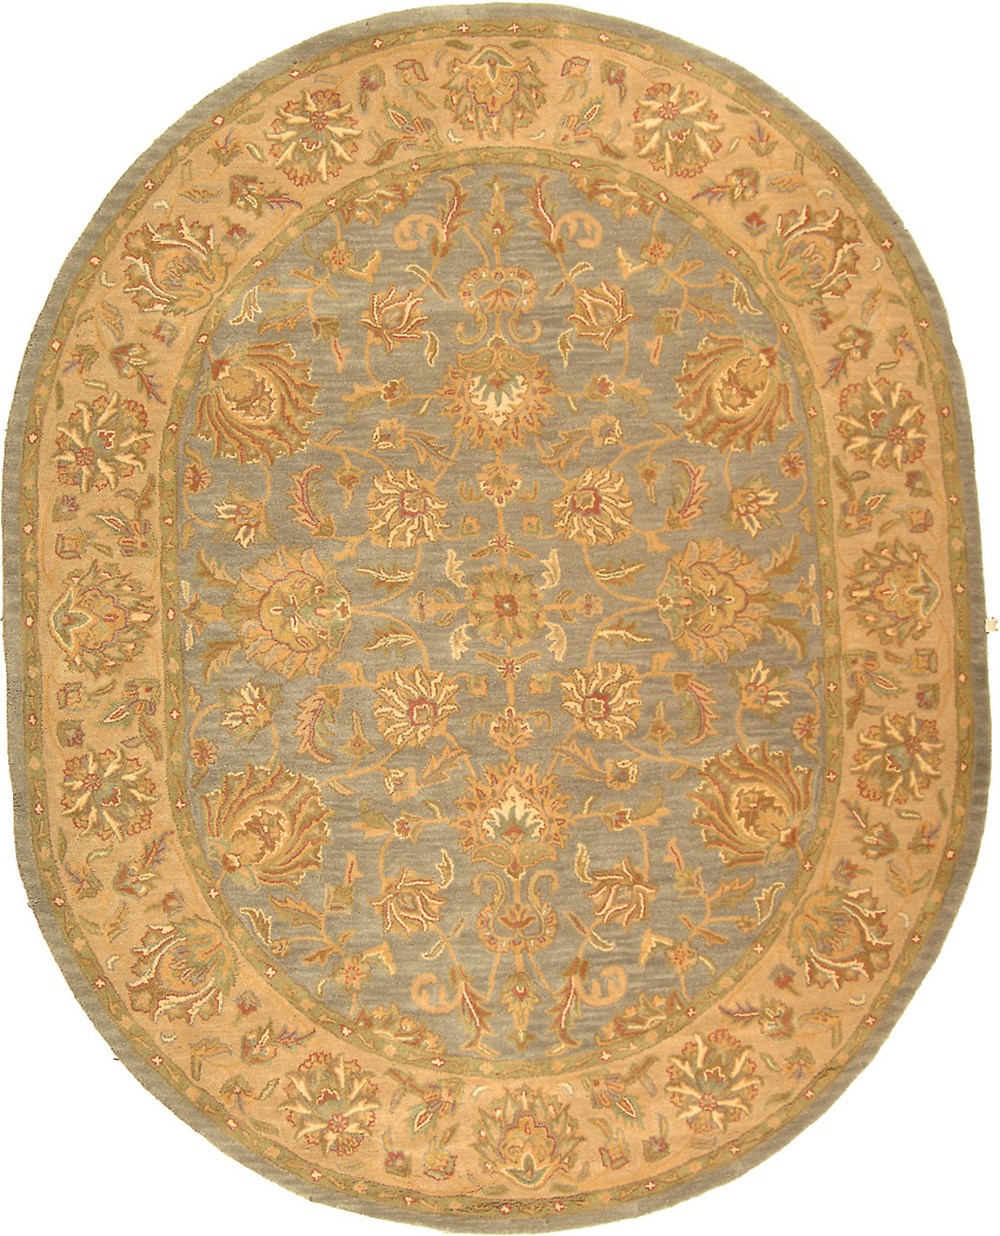 SAFAVIEH Heritage Regis Traditional Wool Area Rug, Blue/Beige, 7'6" x 9'6" Oval - image 1 of 4